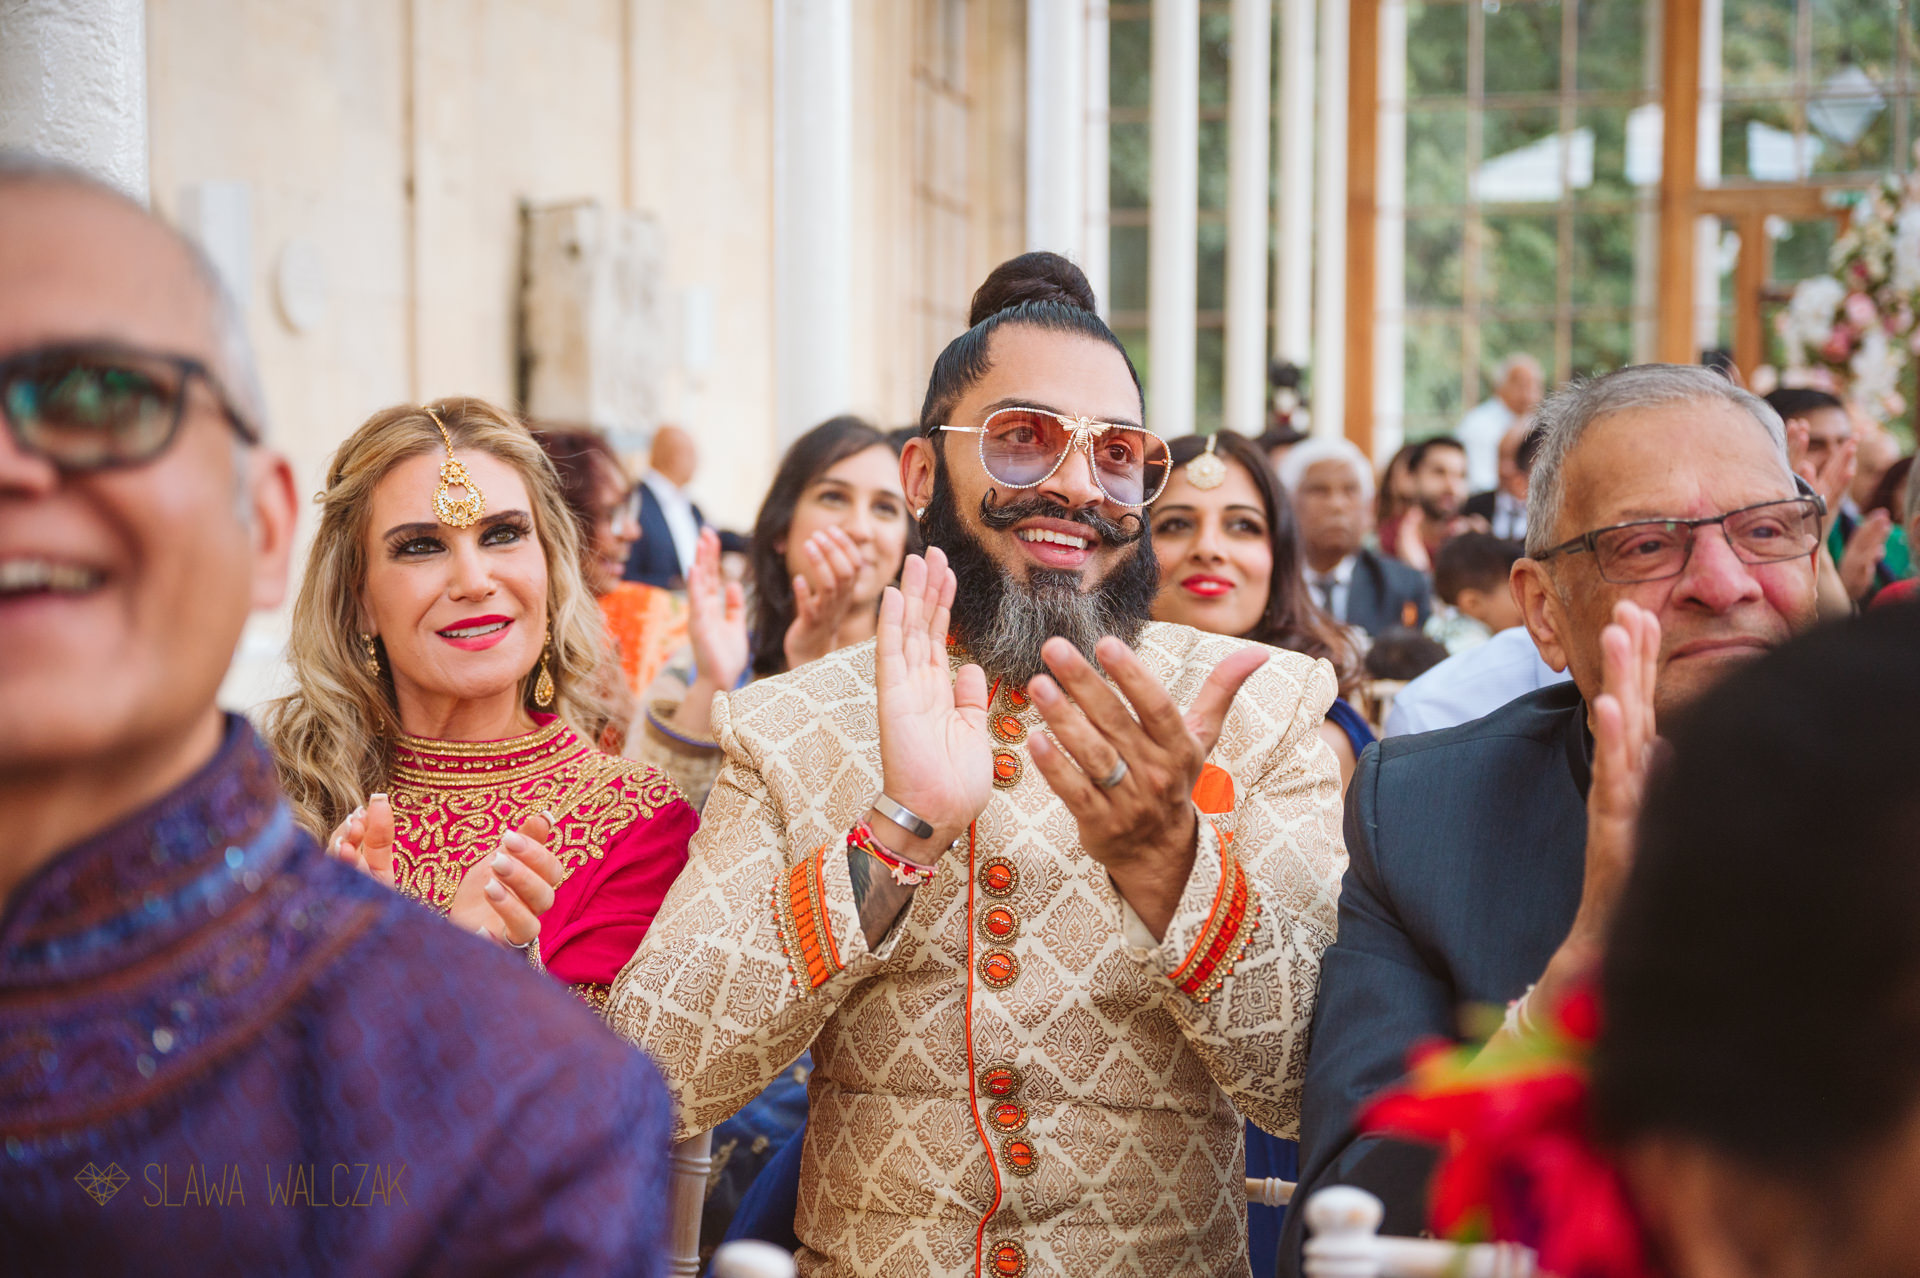 guest photos of an Indian wedding at Kew Gardens